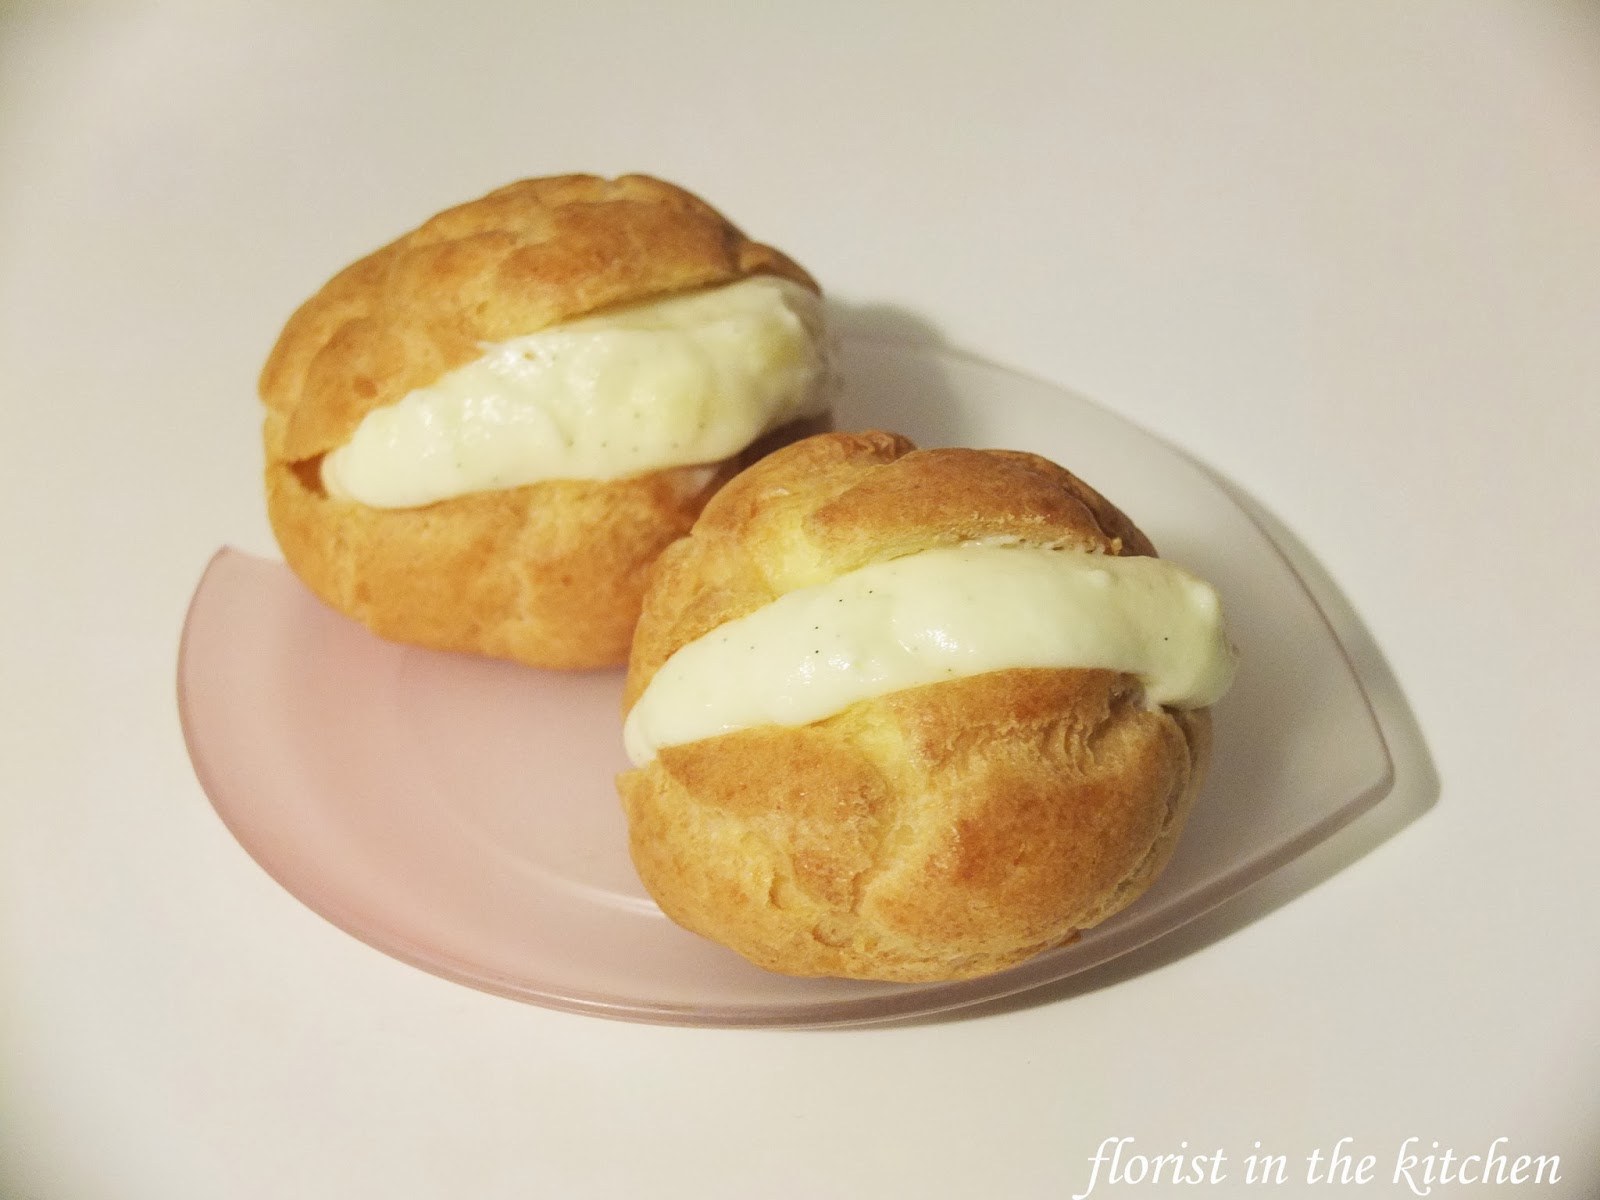 Florist in the kitchen: Japanese Cream Puff Recipe